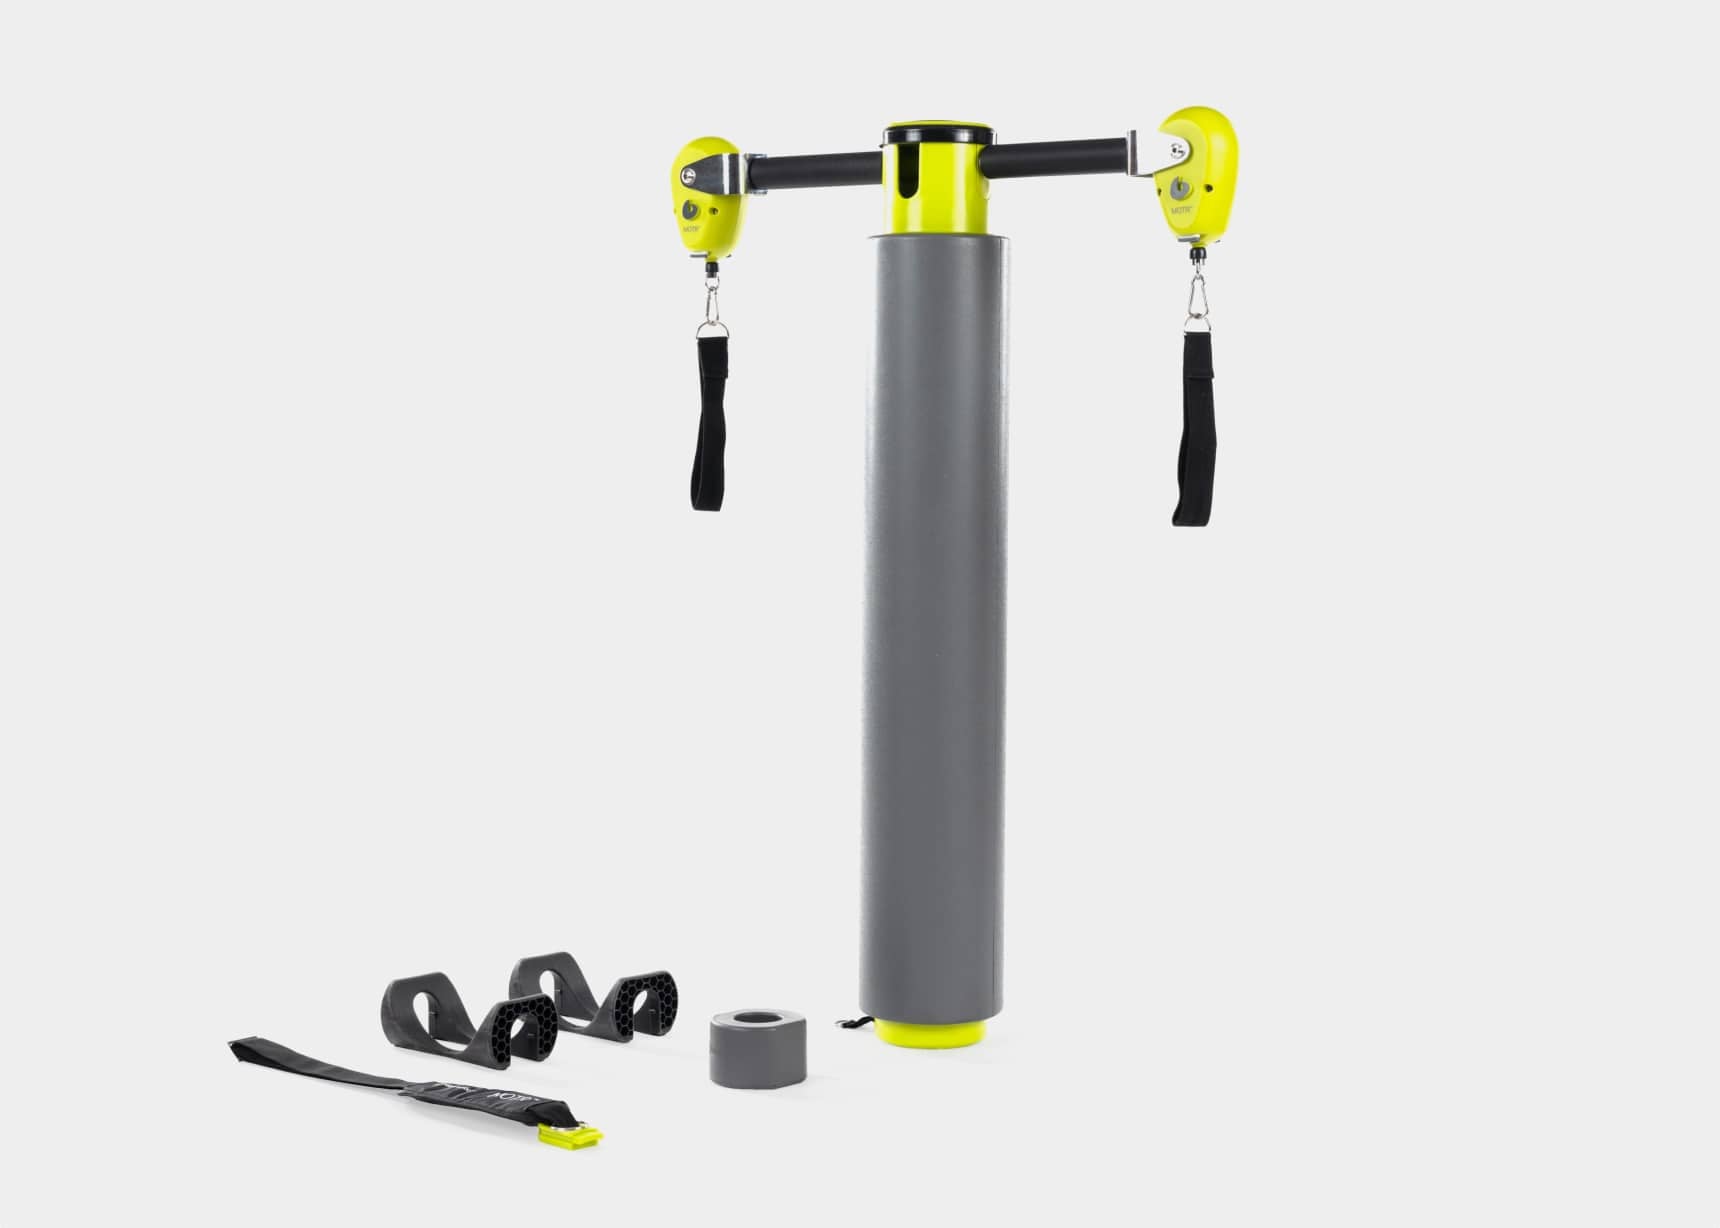  Balanced Body MOTR Pilates Bar, Workout Equipment for